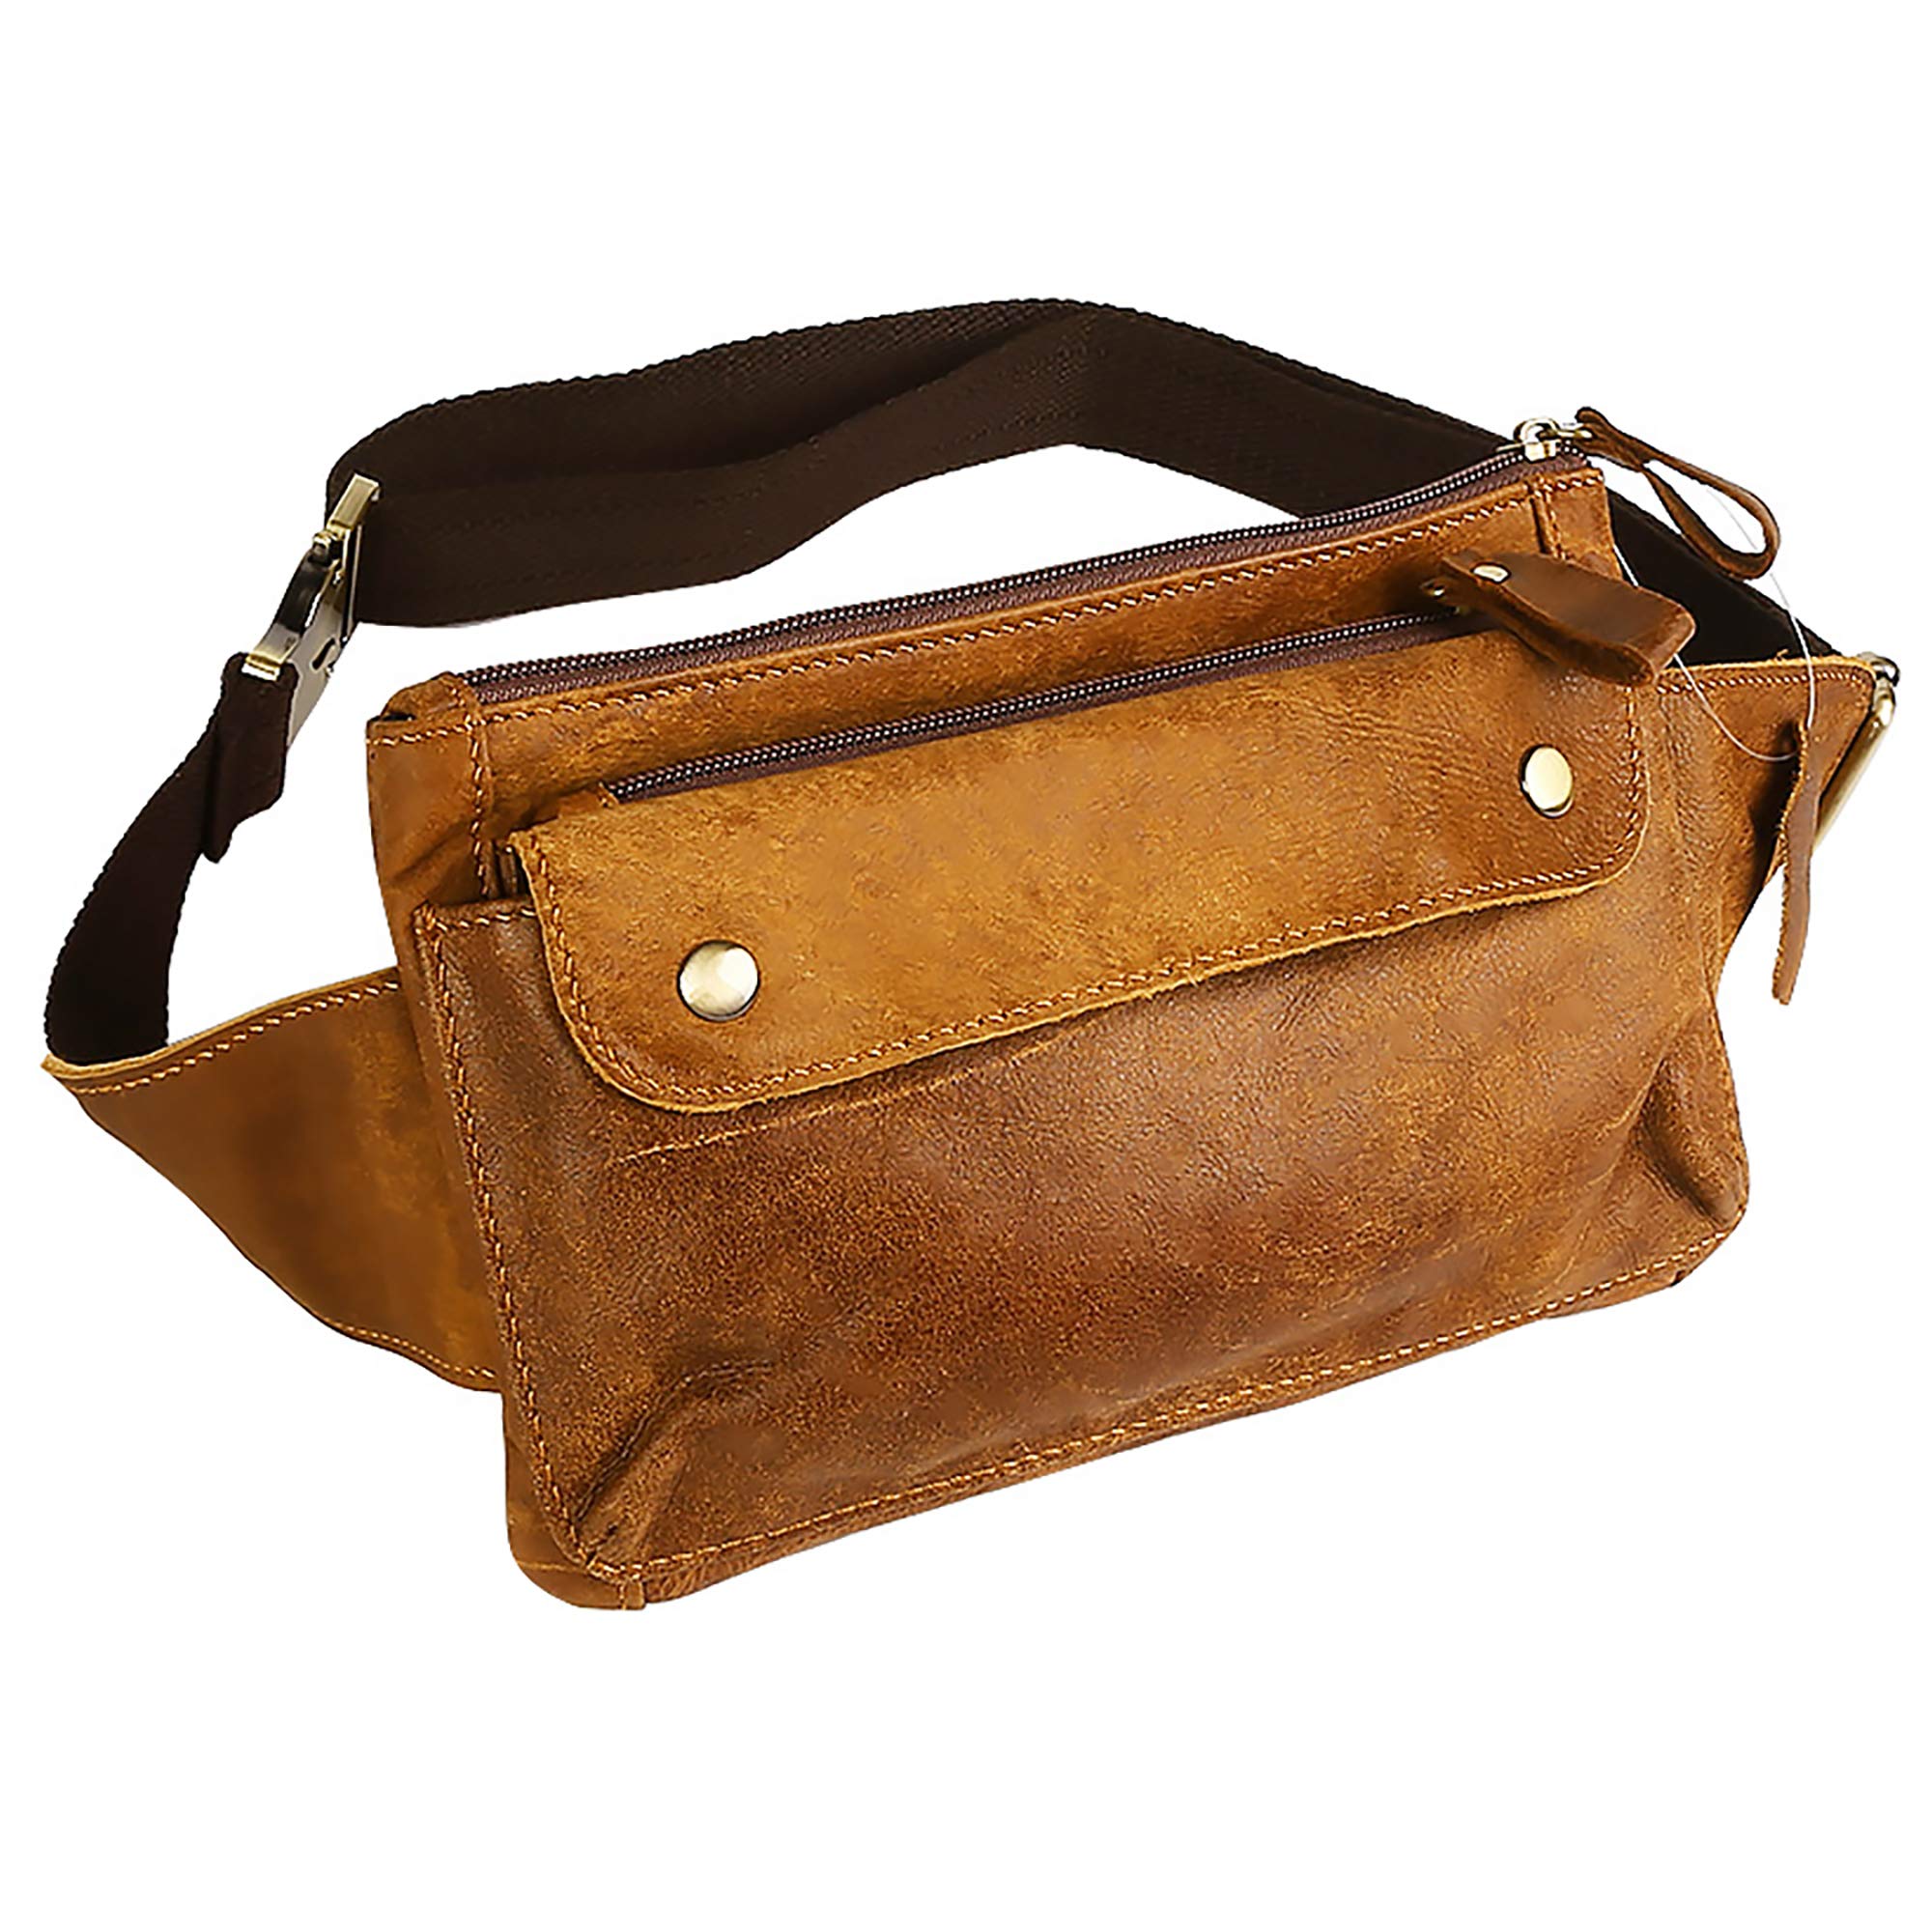 Petzilla Genuine Leather Waist Bag Fanny Pack